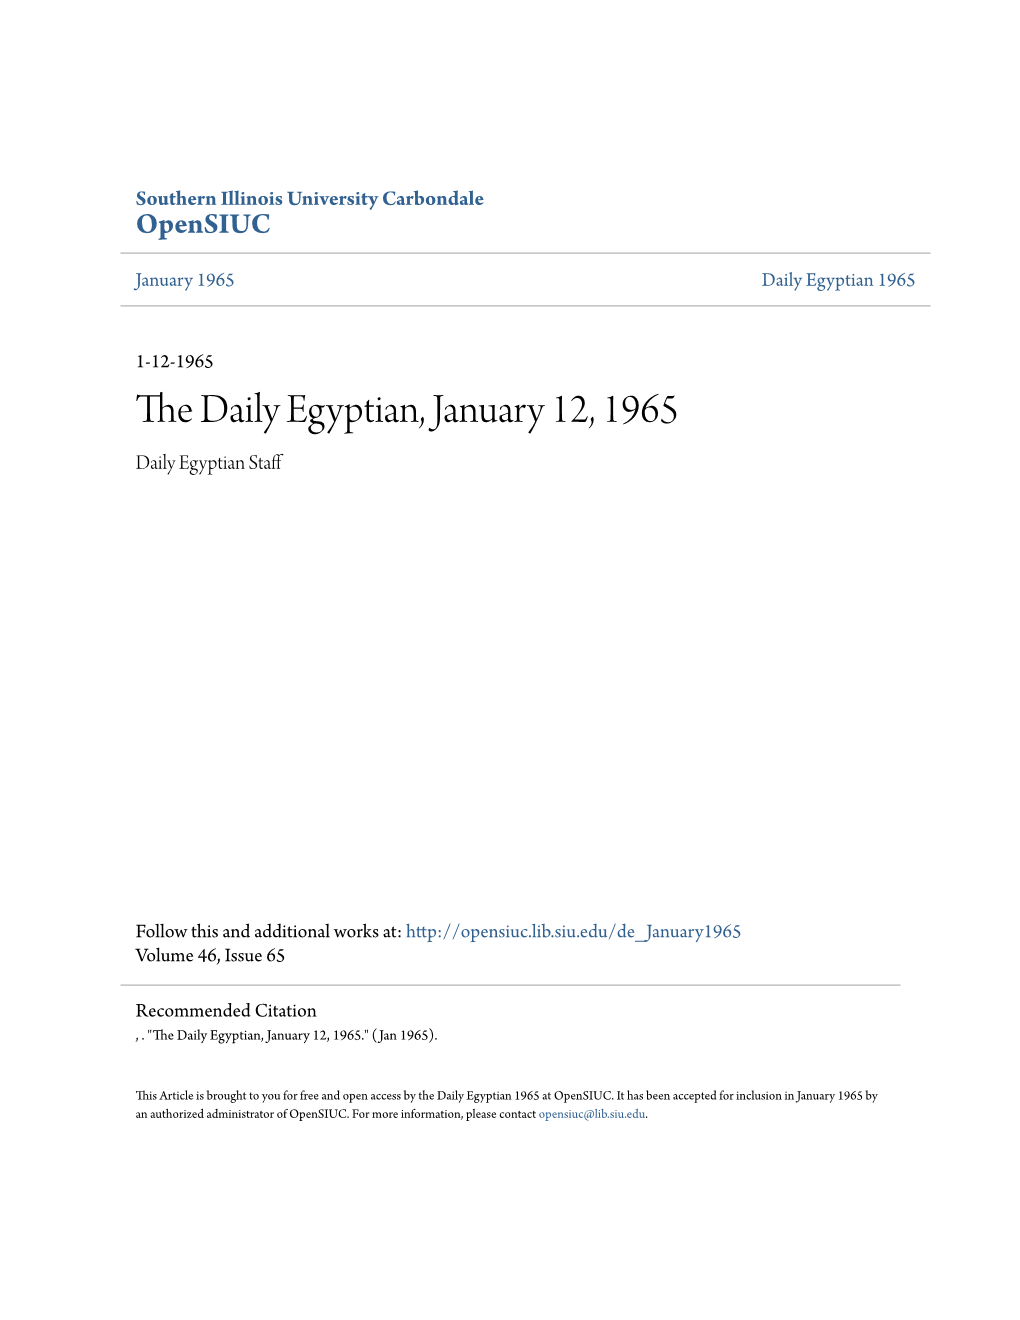 The Daily Egyptian, January 12, 1965